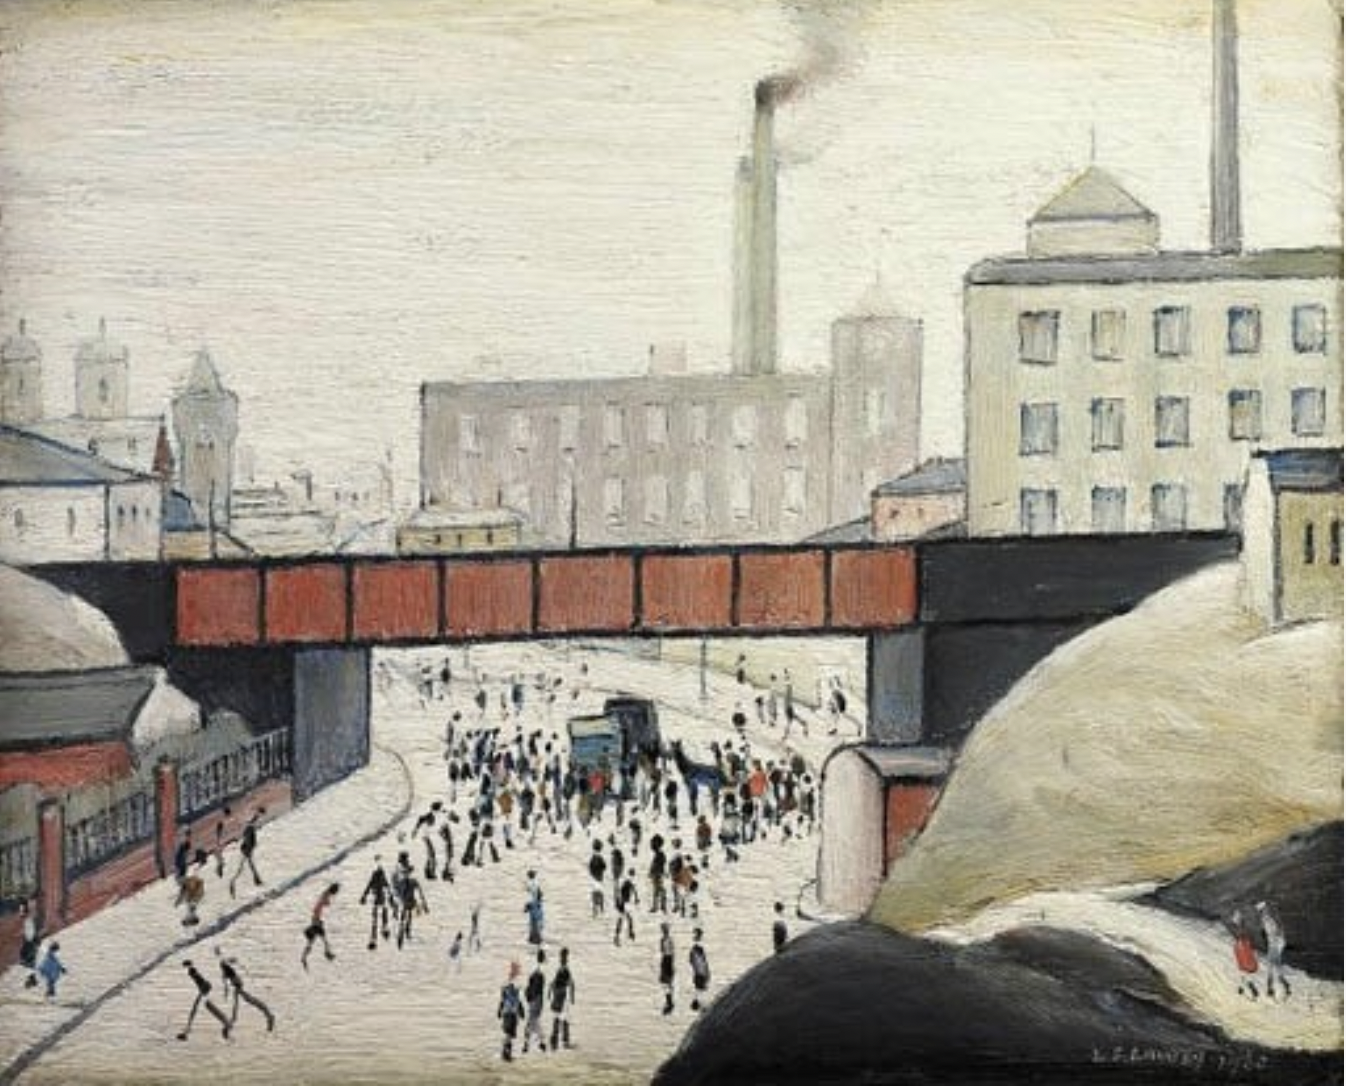 Breakdown under the Bridge (1960) by Laurence Stephen Lowry (1887 - 1976), English artist.